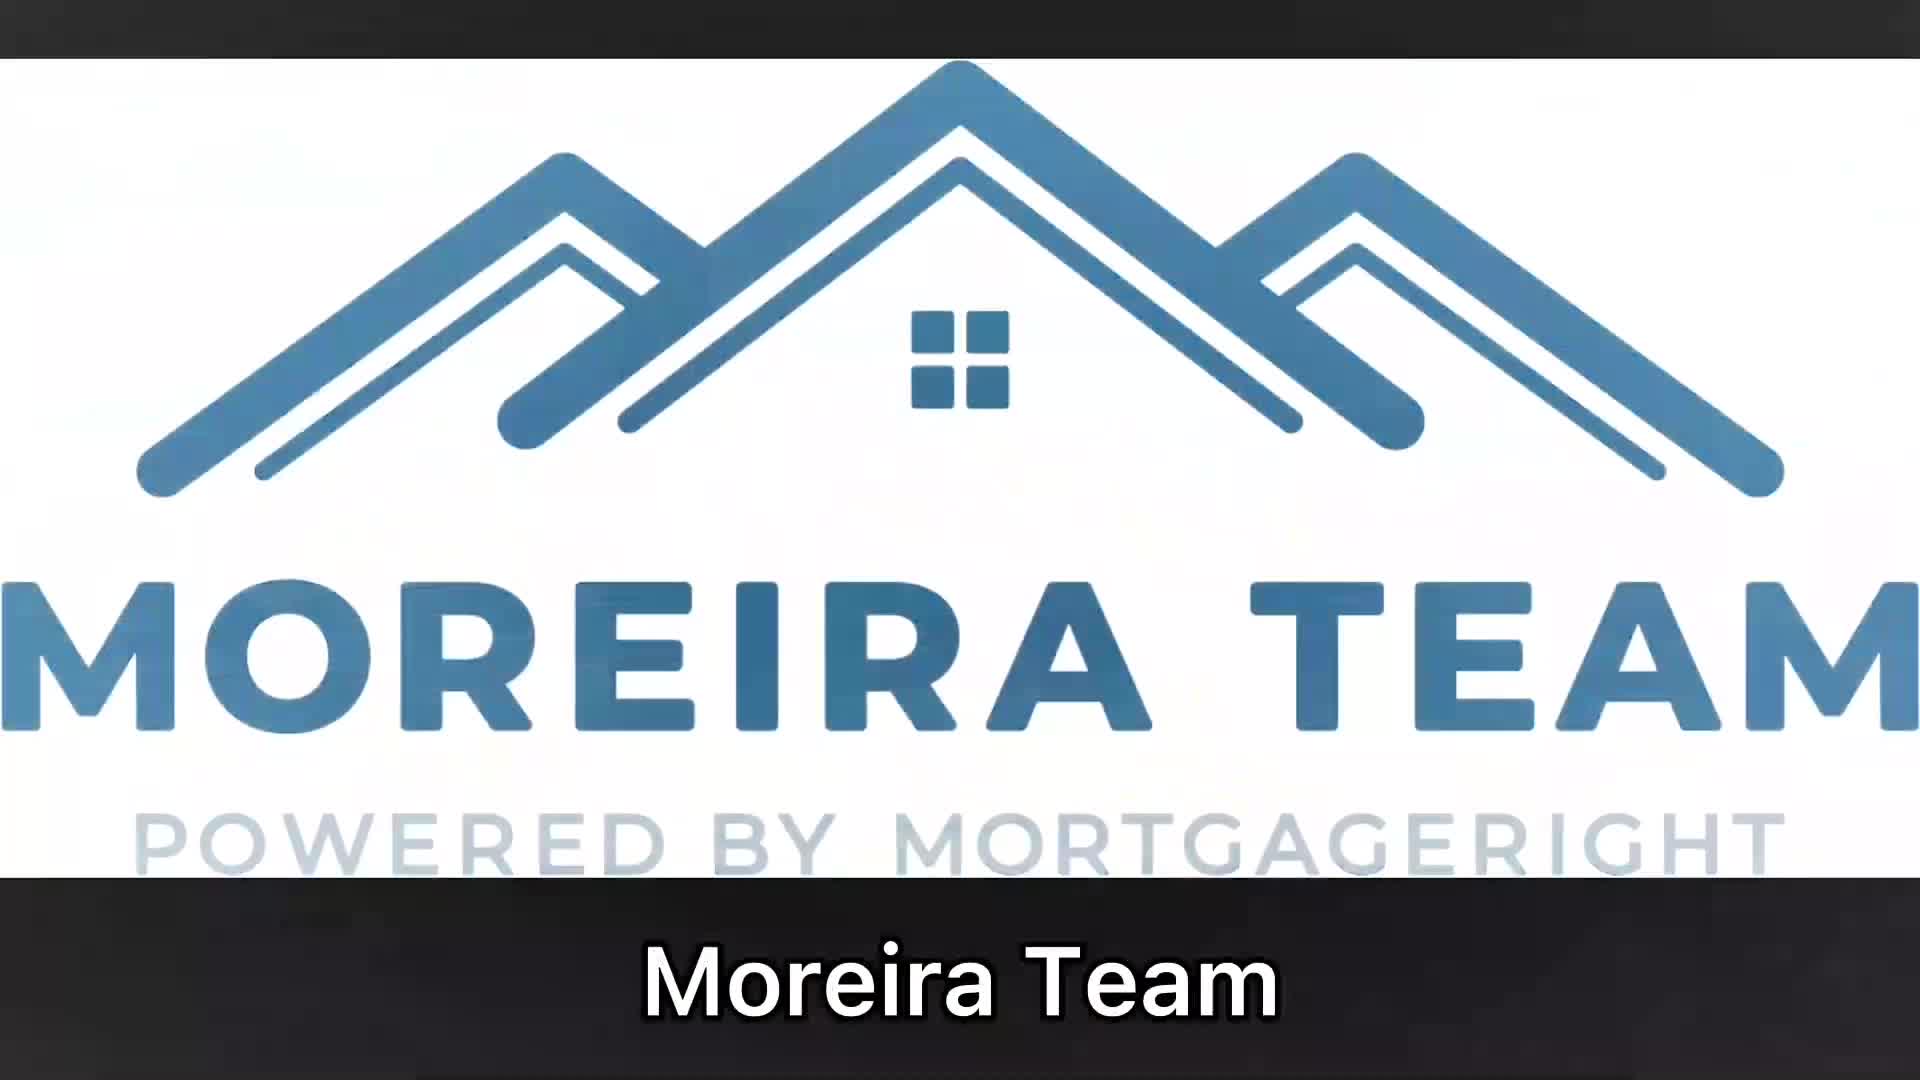 Moreira Team _ MortgageRight